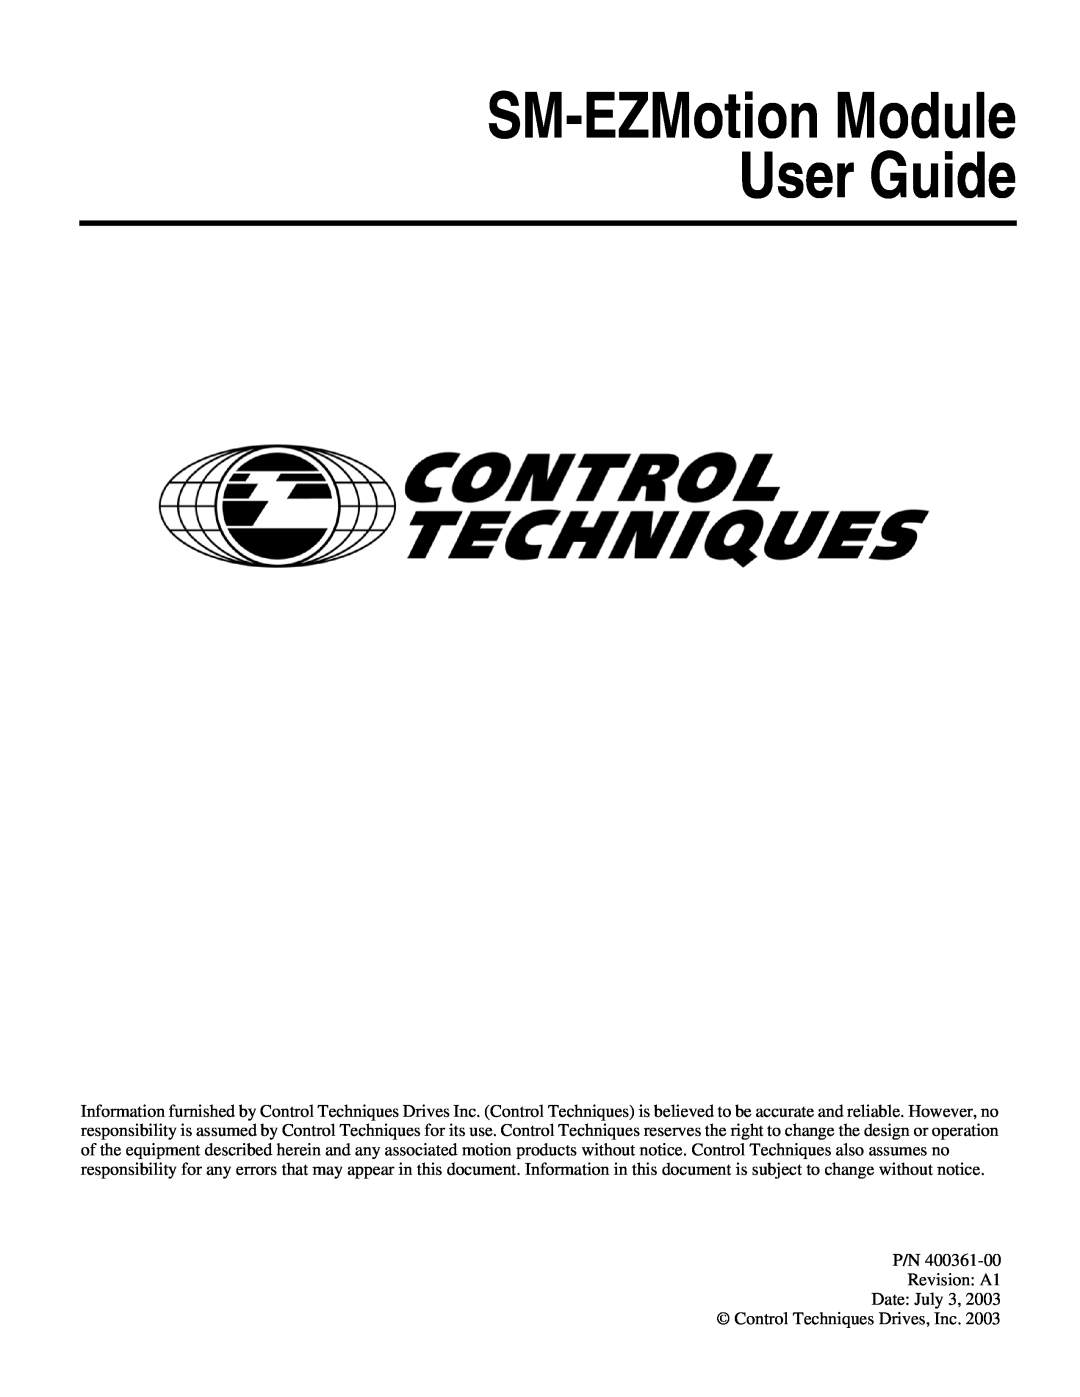 Emerson P/N 400361-00 manual SM-EZMotion Module User Guide 